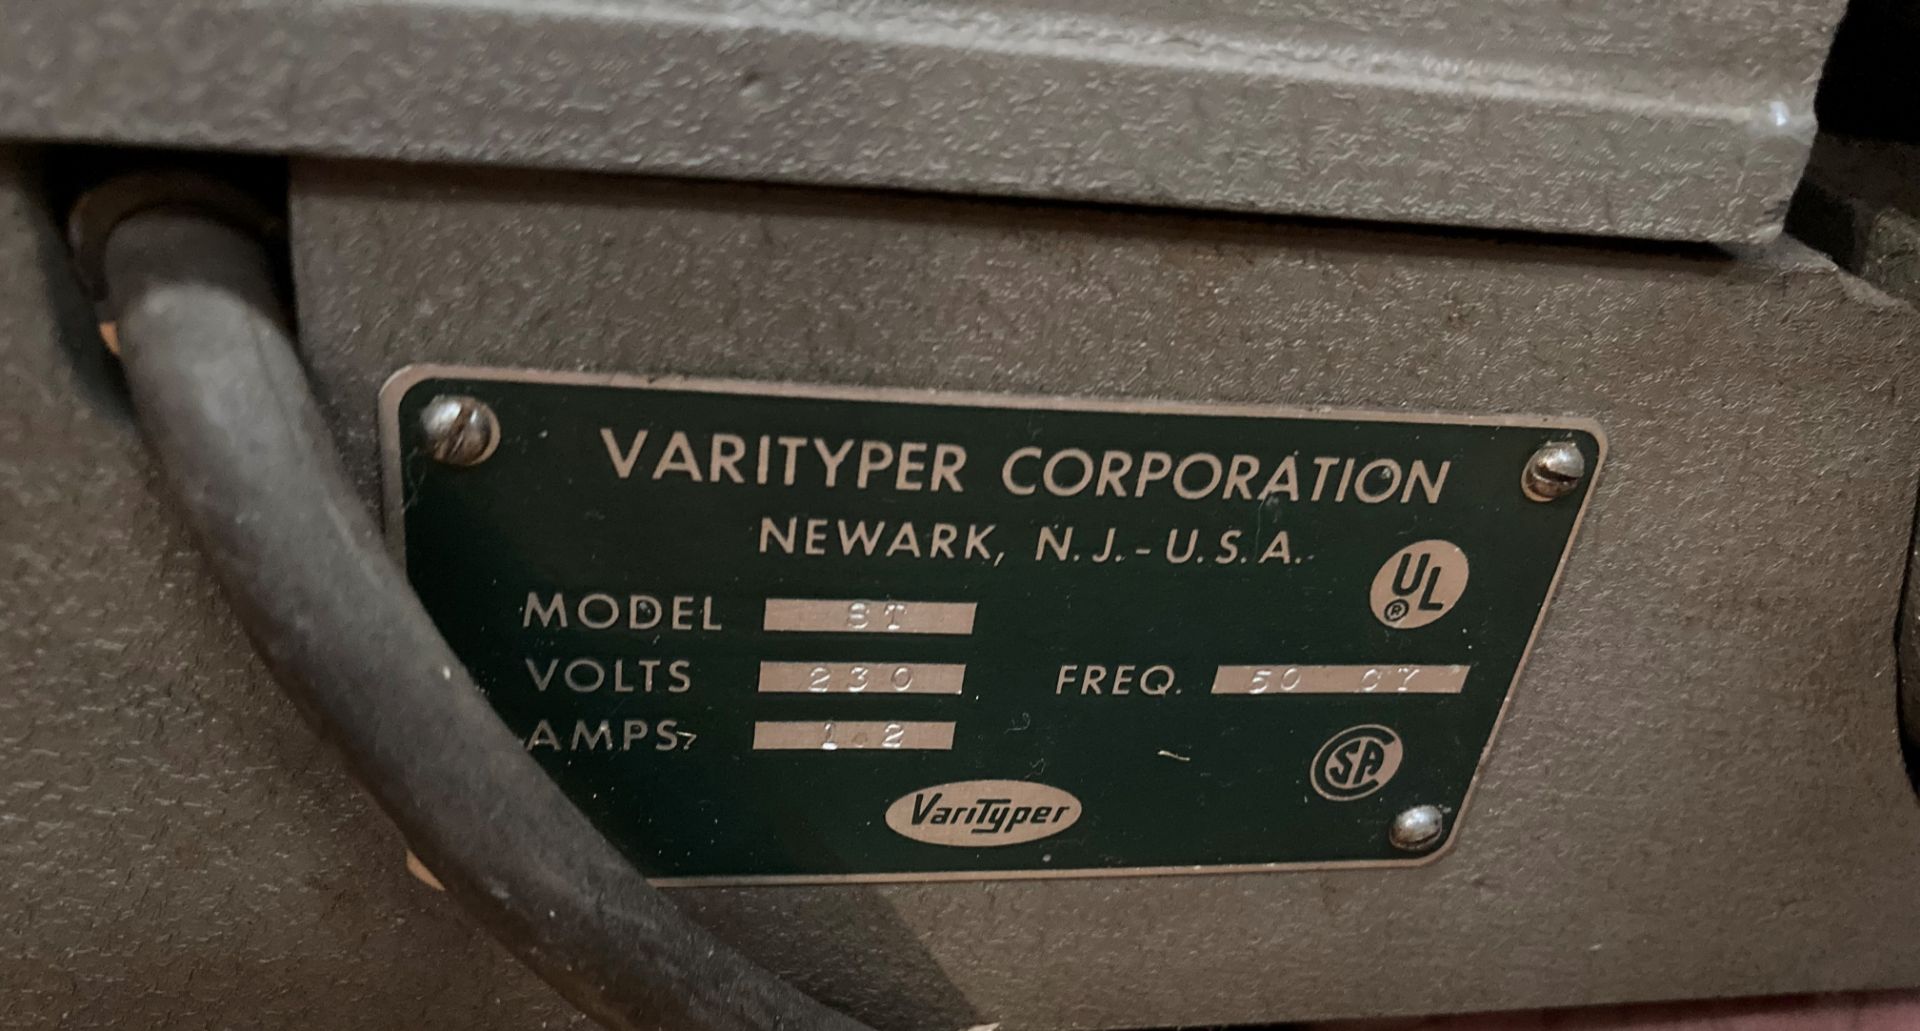 A Varityper Corporation, Newark, N.J. - Image 5 of 10